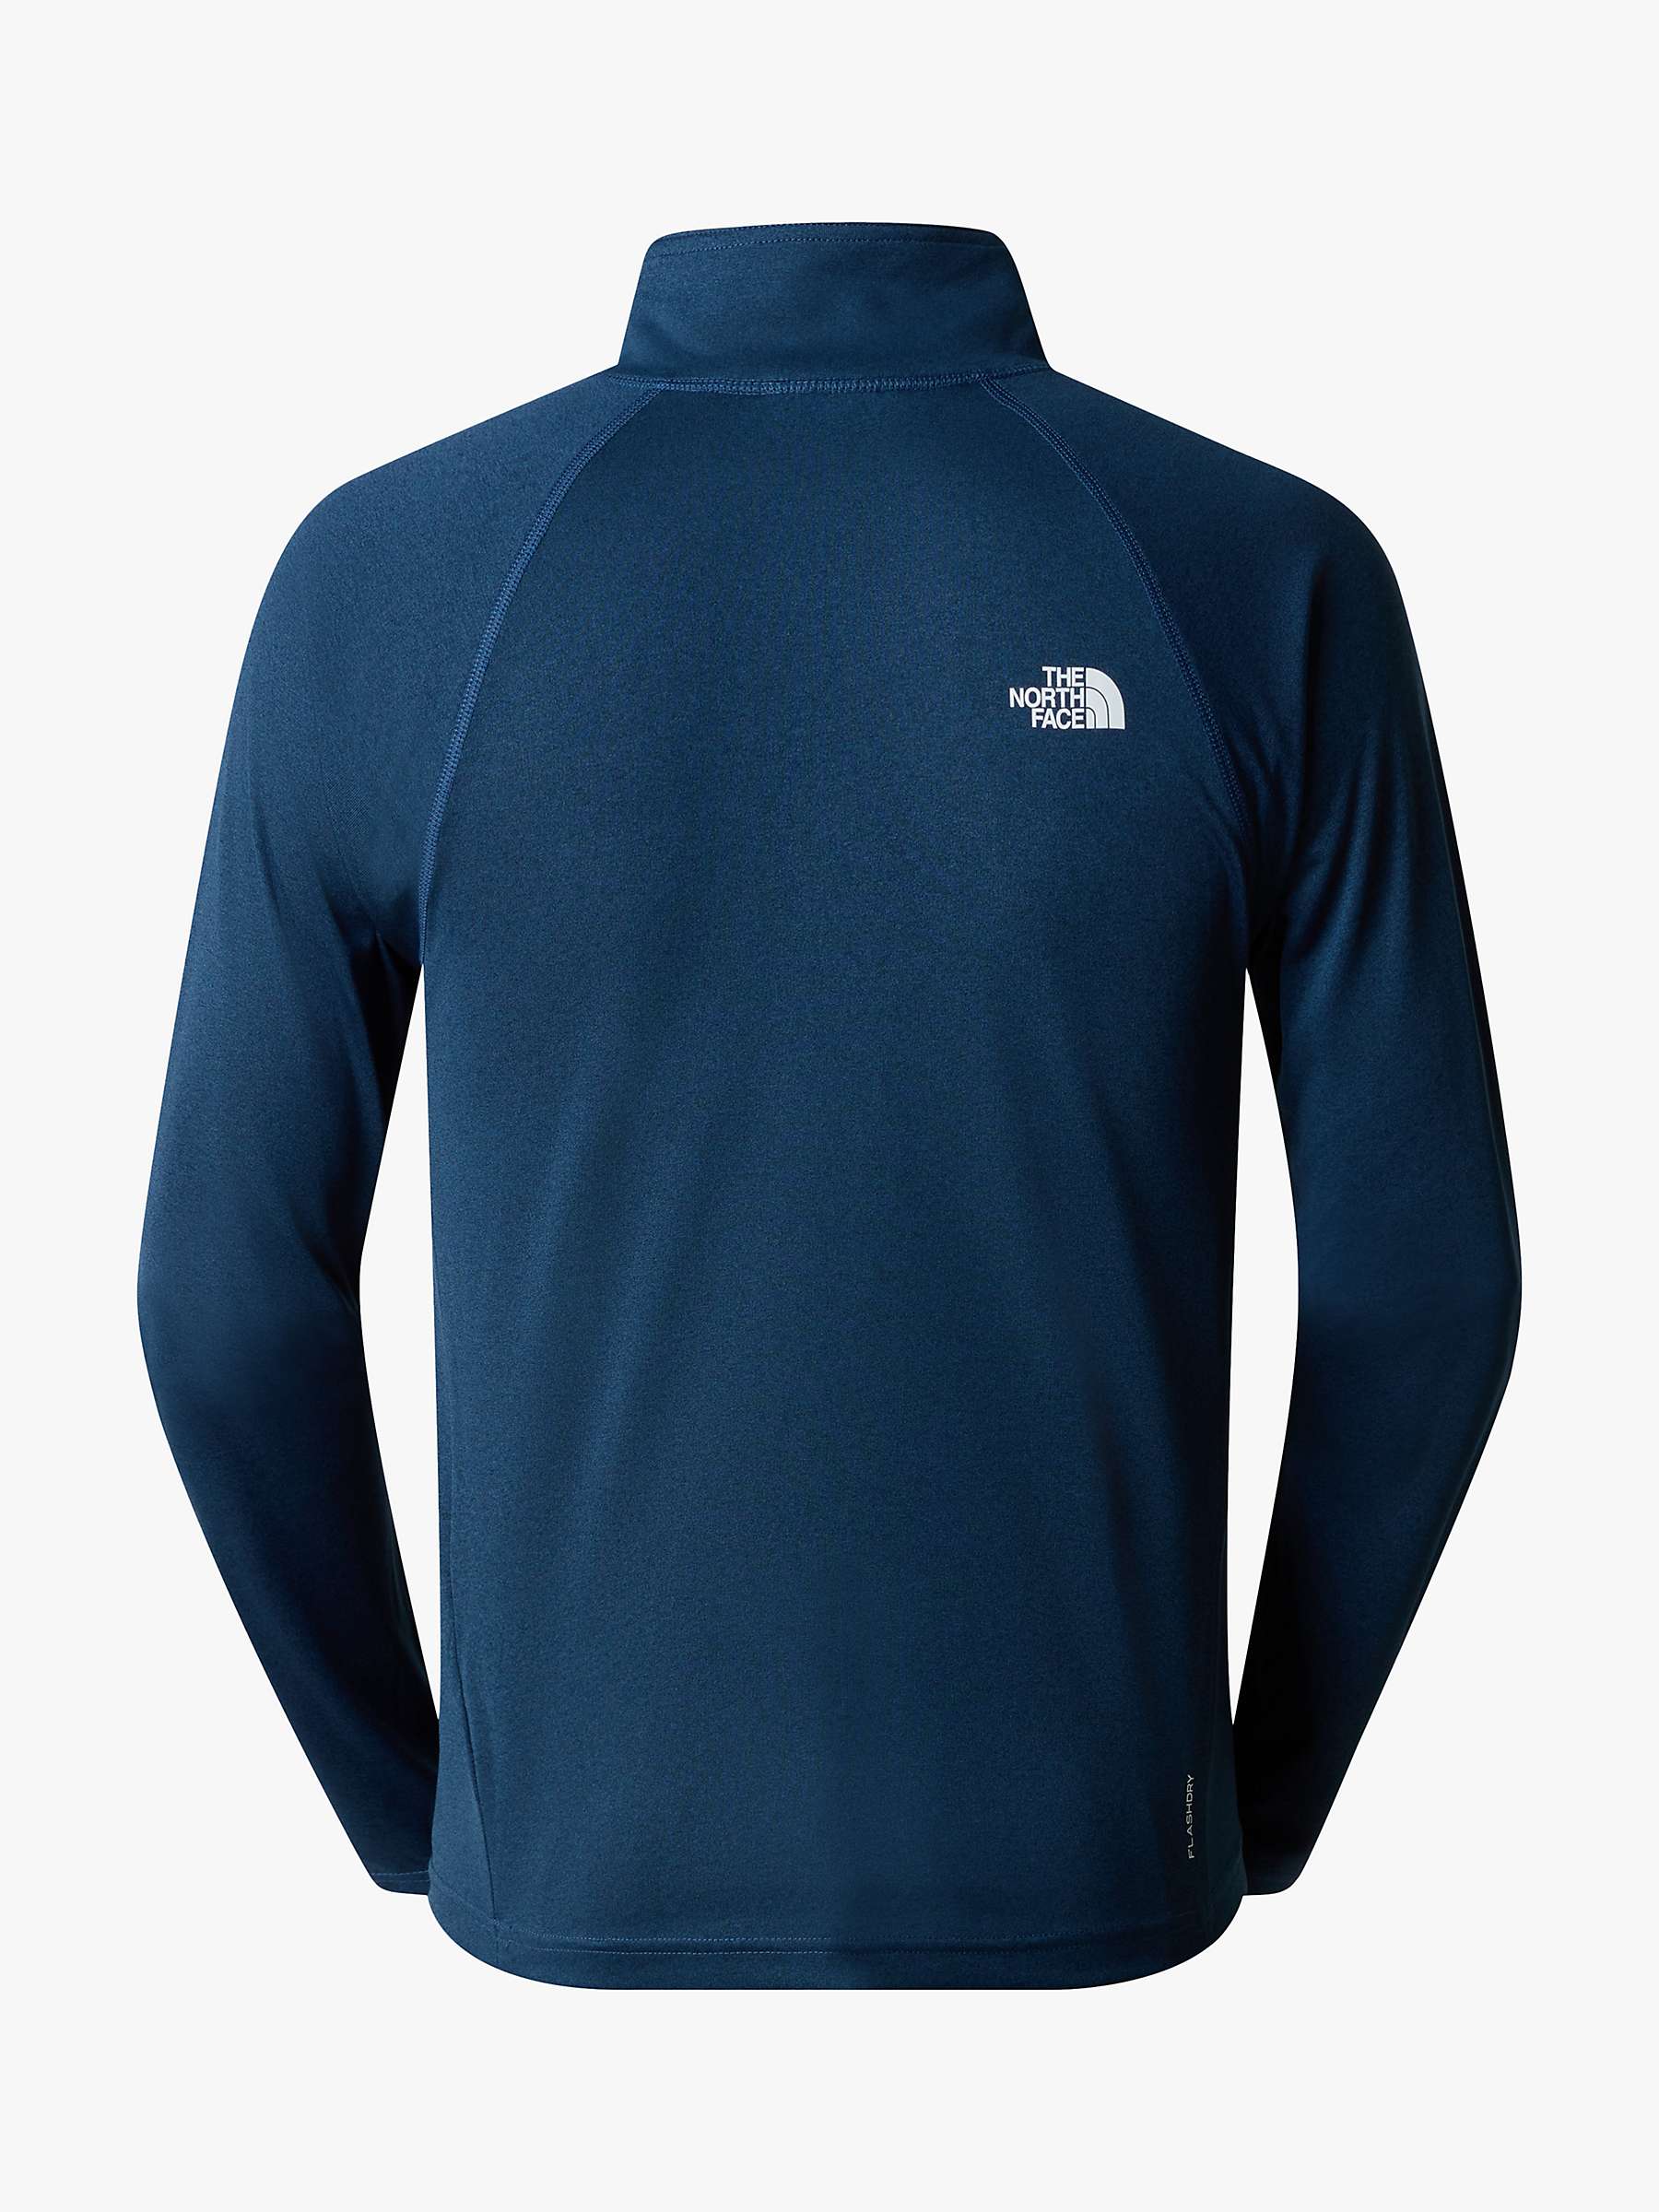 Buy The North Face Flex II 1/4 Zip Long Sleeve T-Shirt, Blue Online at johnlewis.com